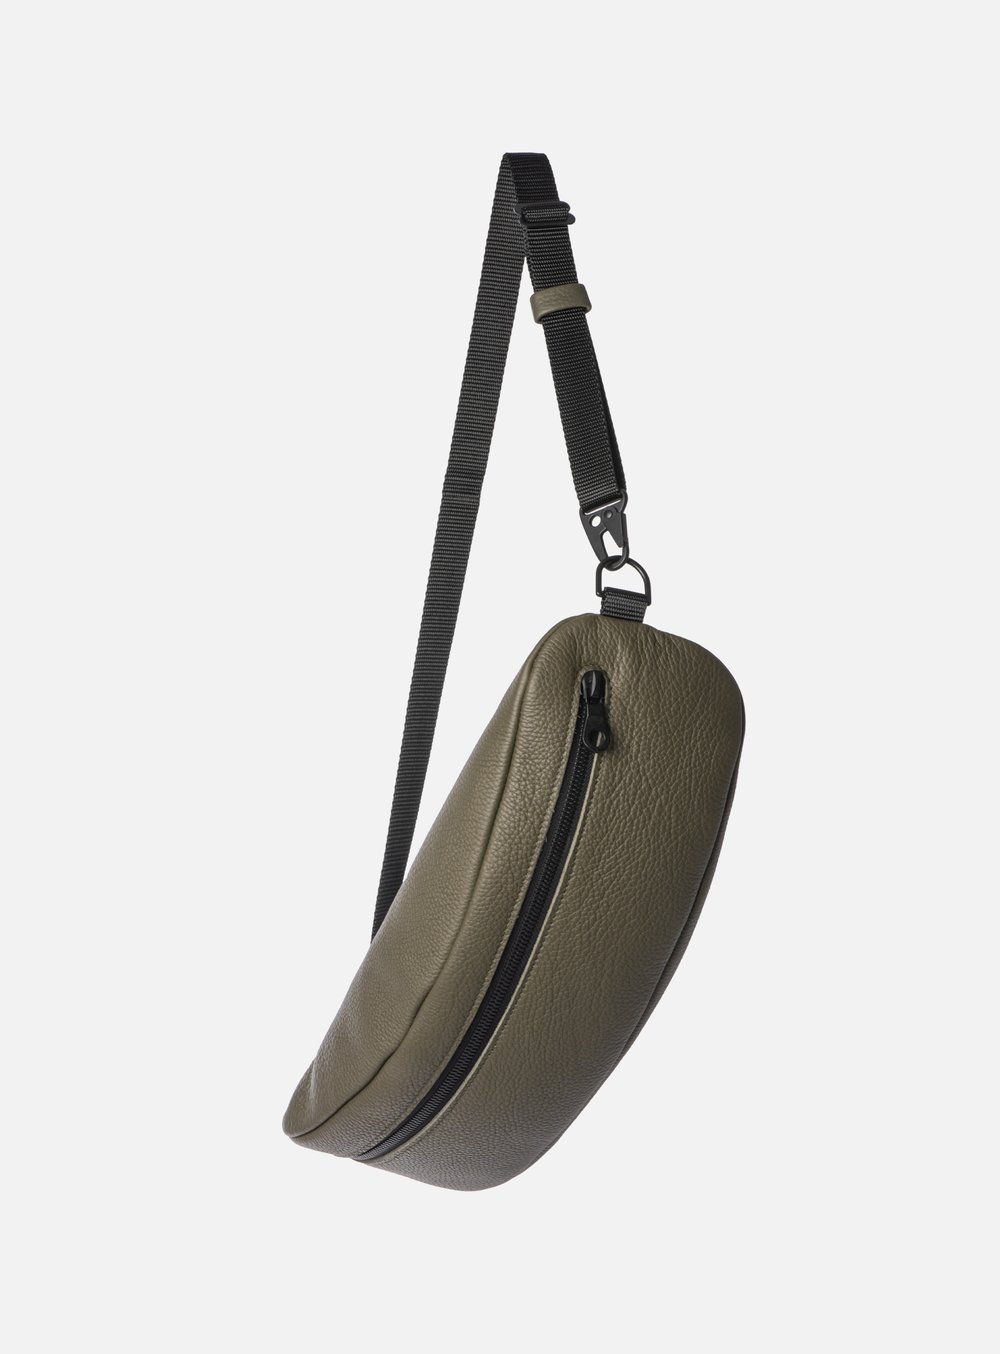 ITALY-Men's handmade genuine leather handbag with metal zip